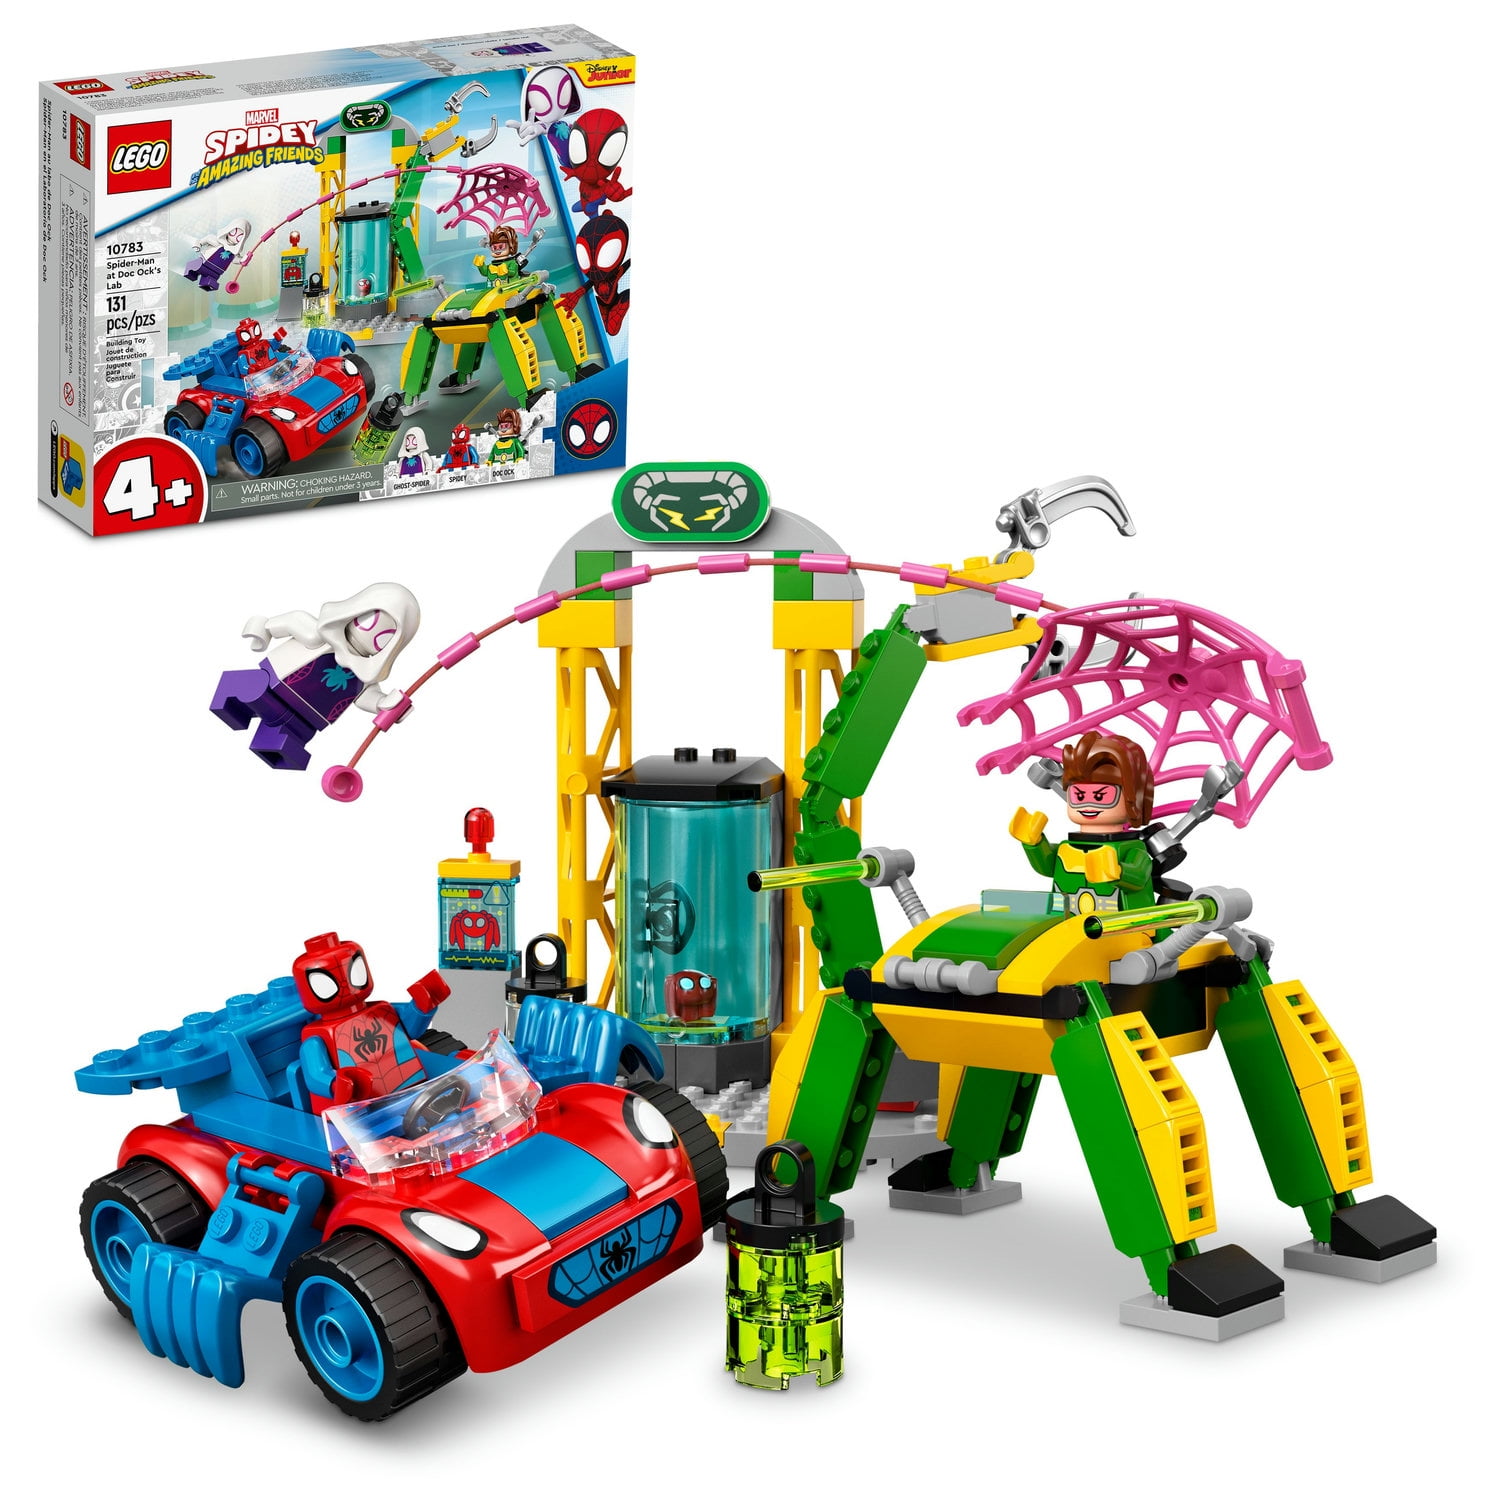 LEGO Spider-Man at Doc Lab 10783 Building Set (131 Pieces) -